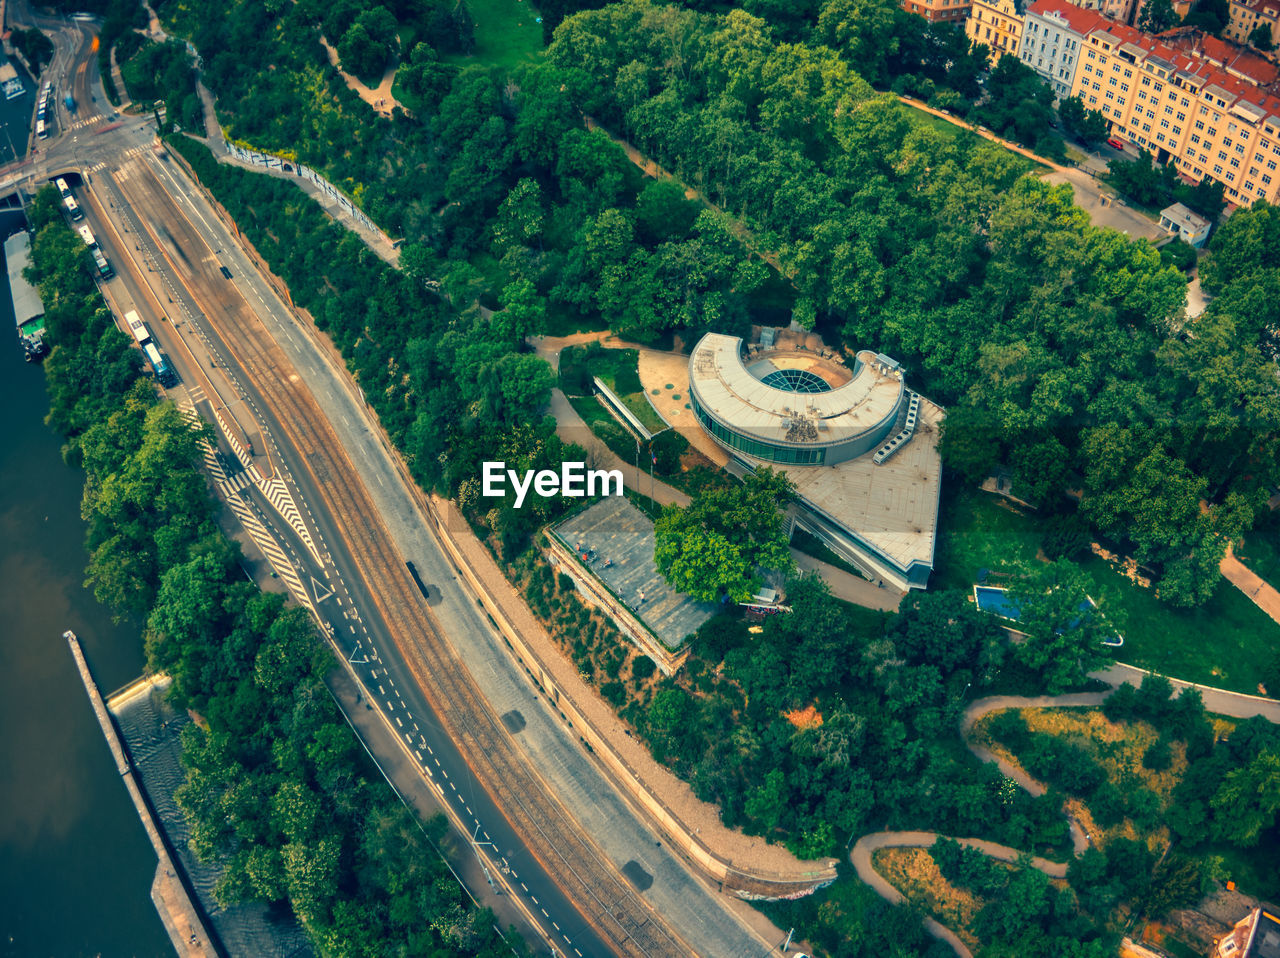 Aerial view of havas building in prague expo 58